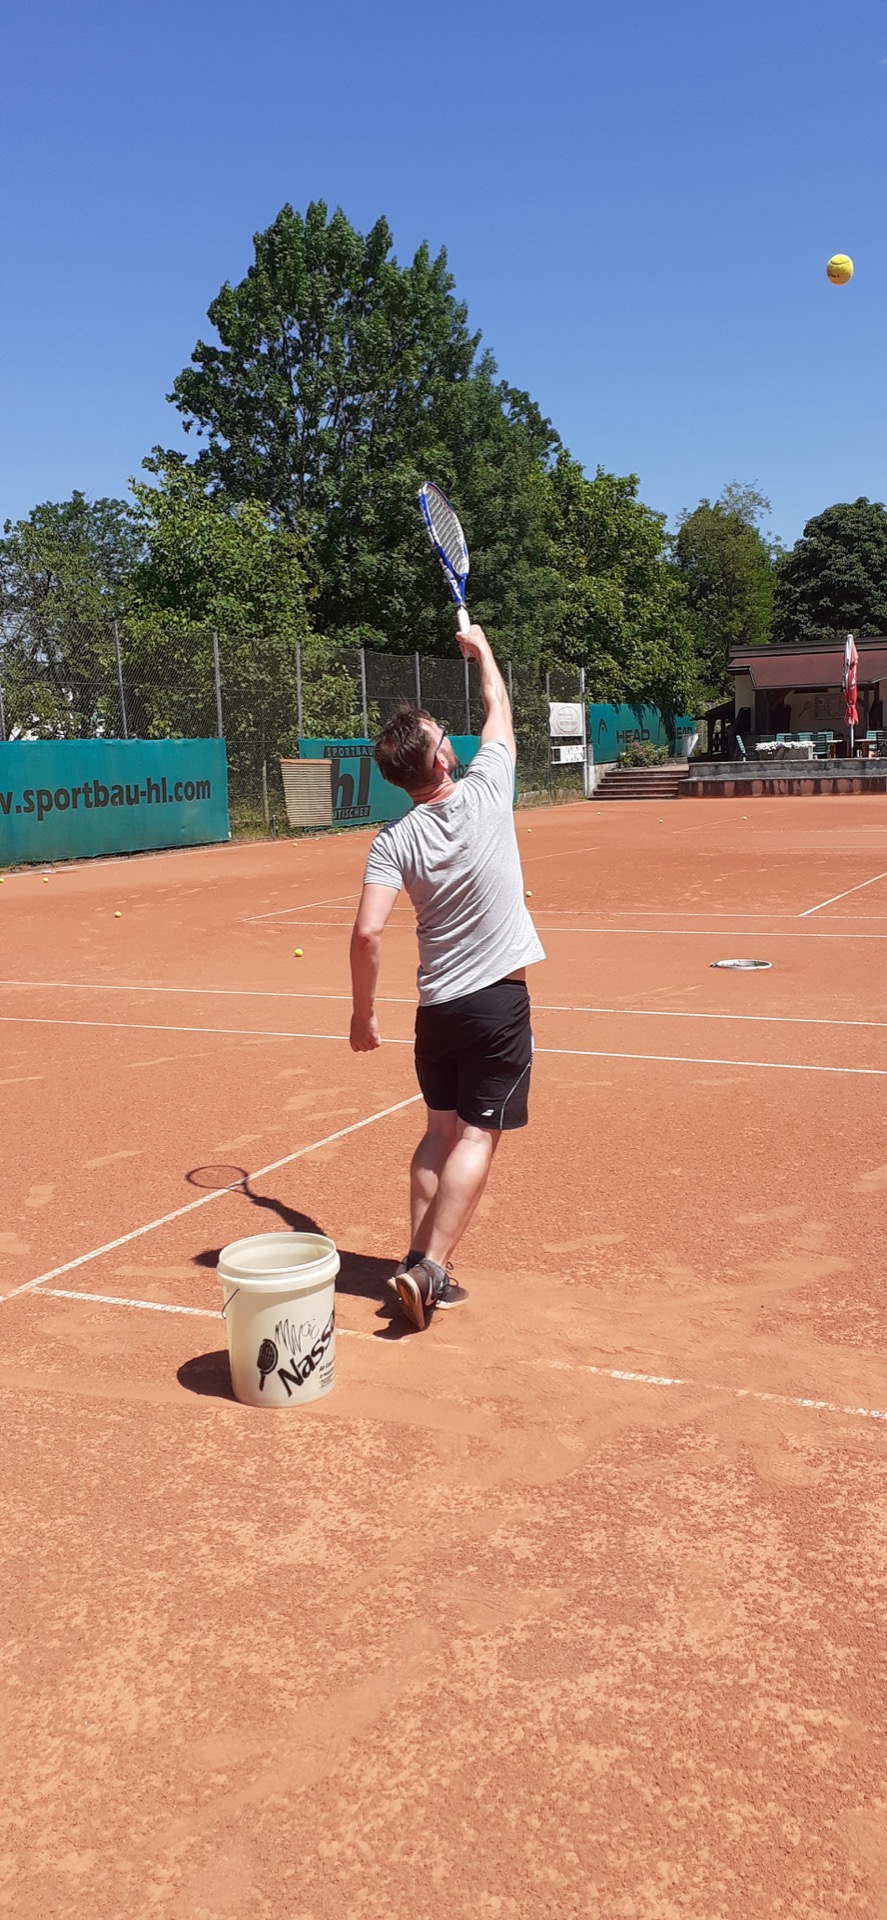 Kooperation mit ATUS Rosenau Tennis in Ballspiele - Bild 6